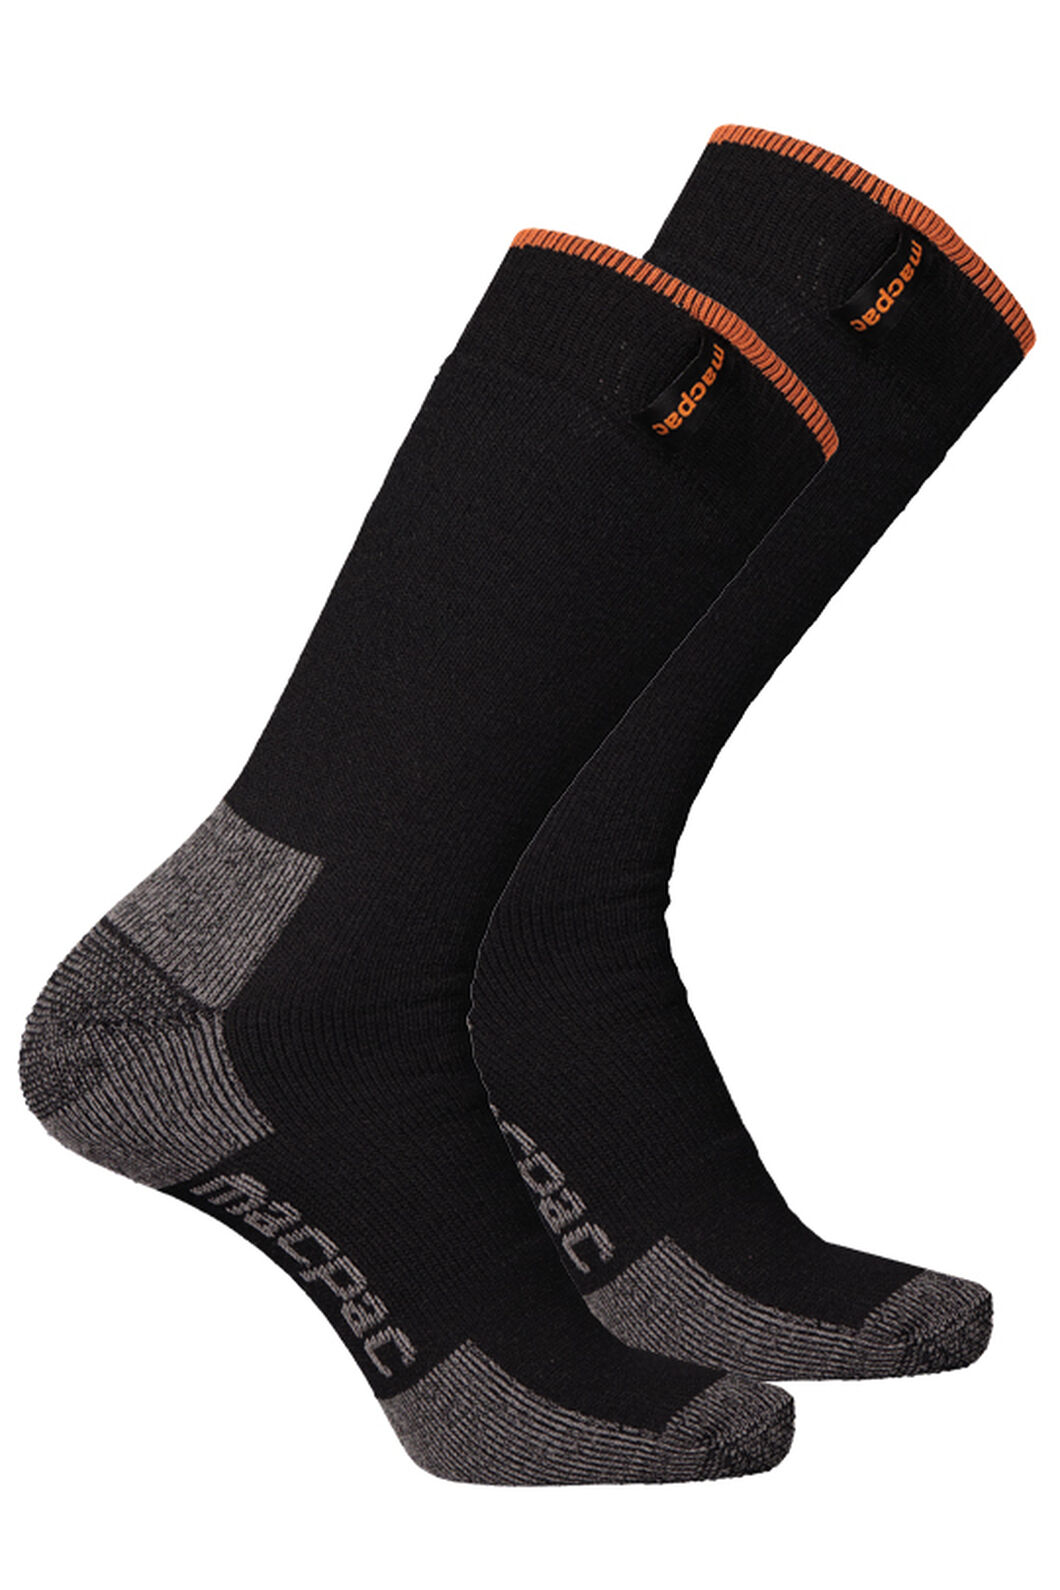 Macpac Thermal Socks 2 Pack | Macpac